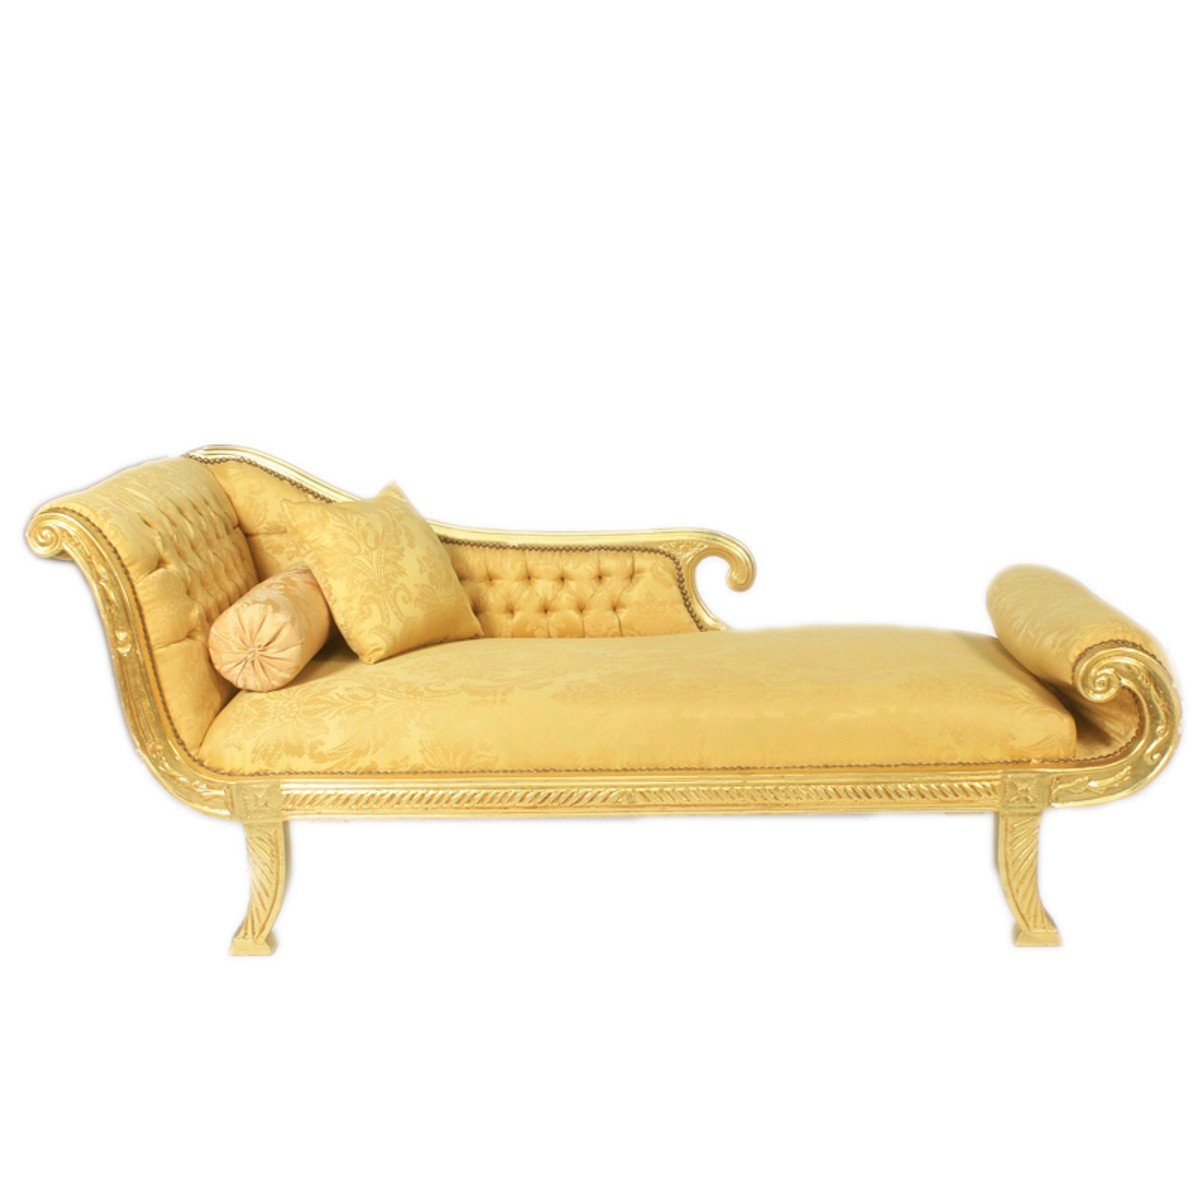 Stil Modell Barock Linke Gold - Muster Möbel Padrino Recamiere Casa Gold Wohnzimmer - XXL Antik Seite Chaiselongue / Chaiselongue